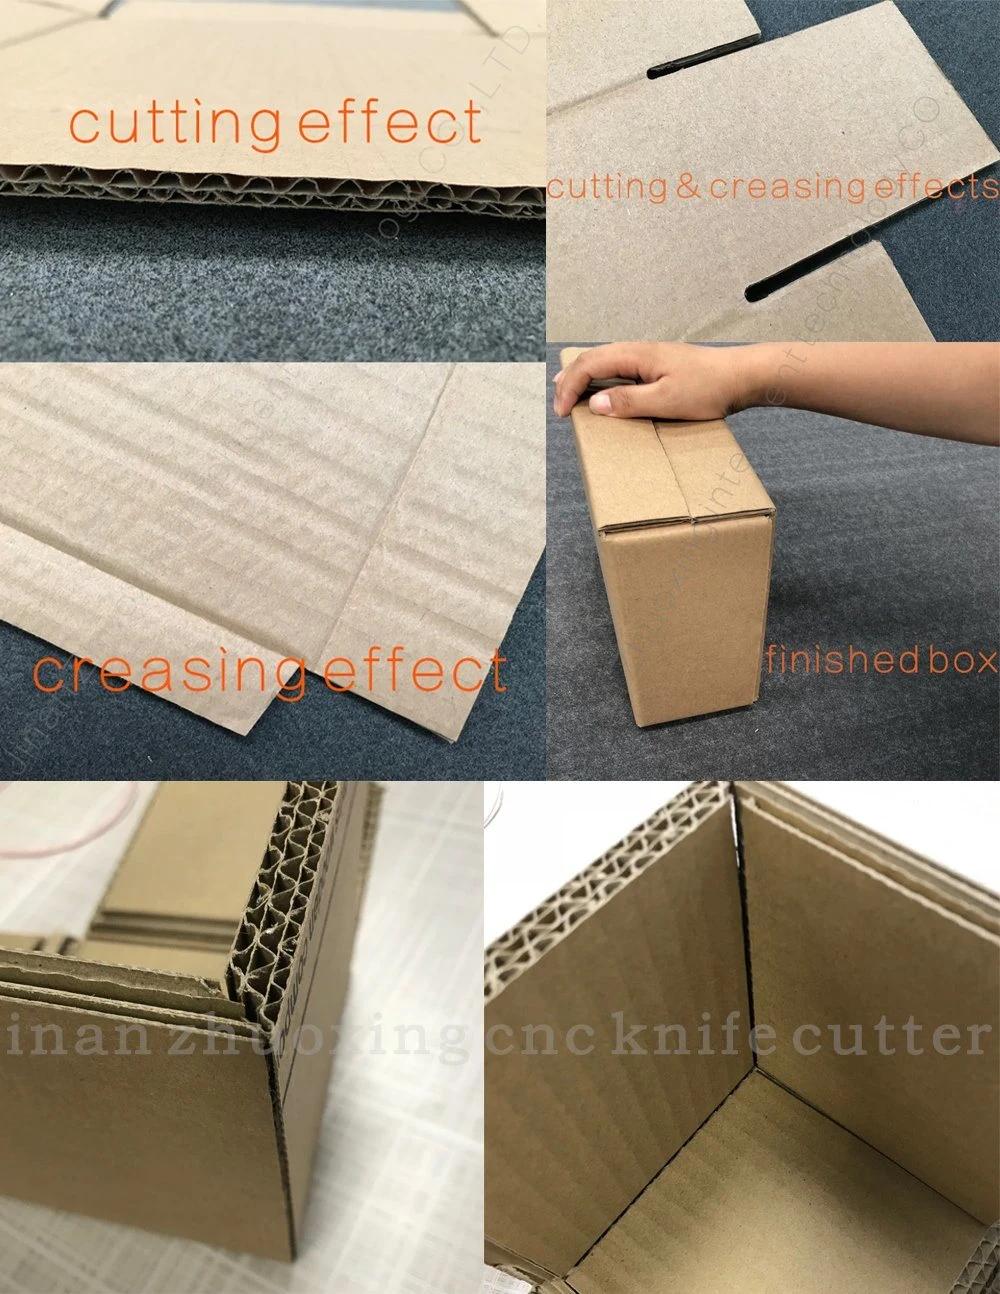 High Precision CNC Acrylic /Carton Box /Cardboard Cutter Machine with Factory Price